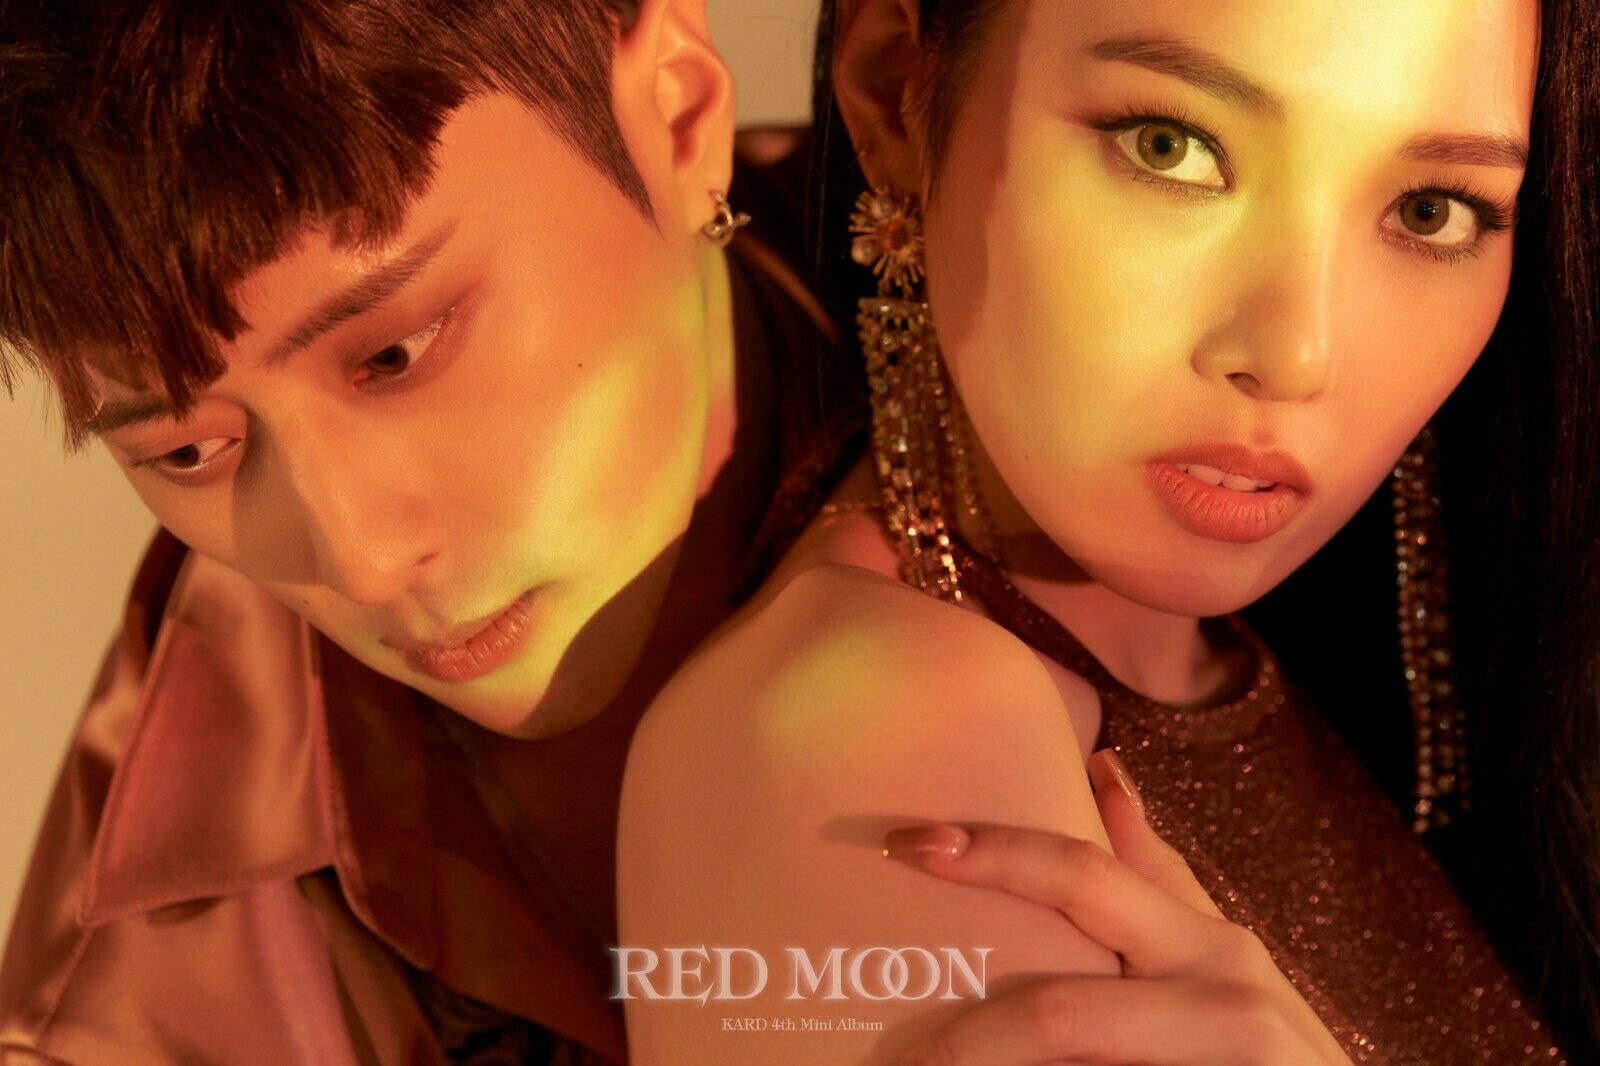 KARD - [Red Moon] 4th Mini Album